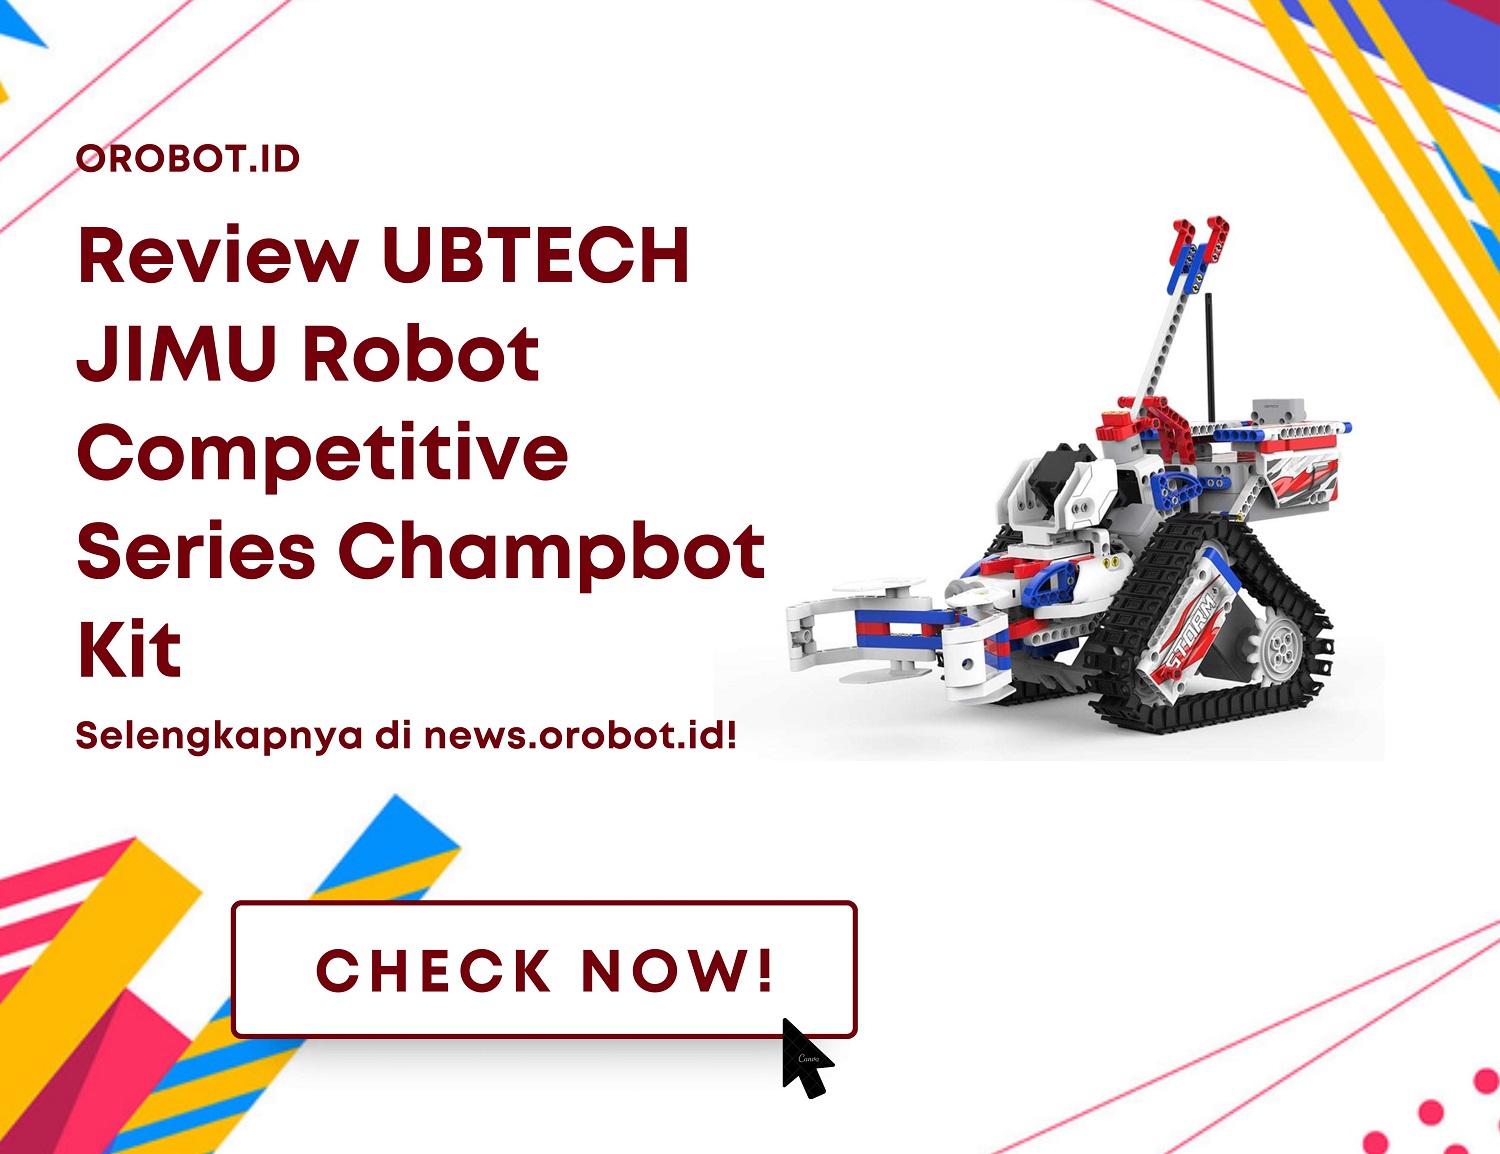 Review UBTECH JIMU Robot Competitive Series Champbot, Produk Untuk Belajar Merakit dan Memprogram Robot